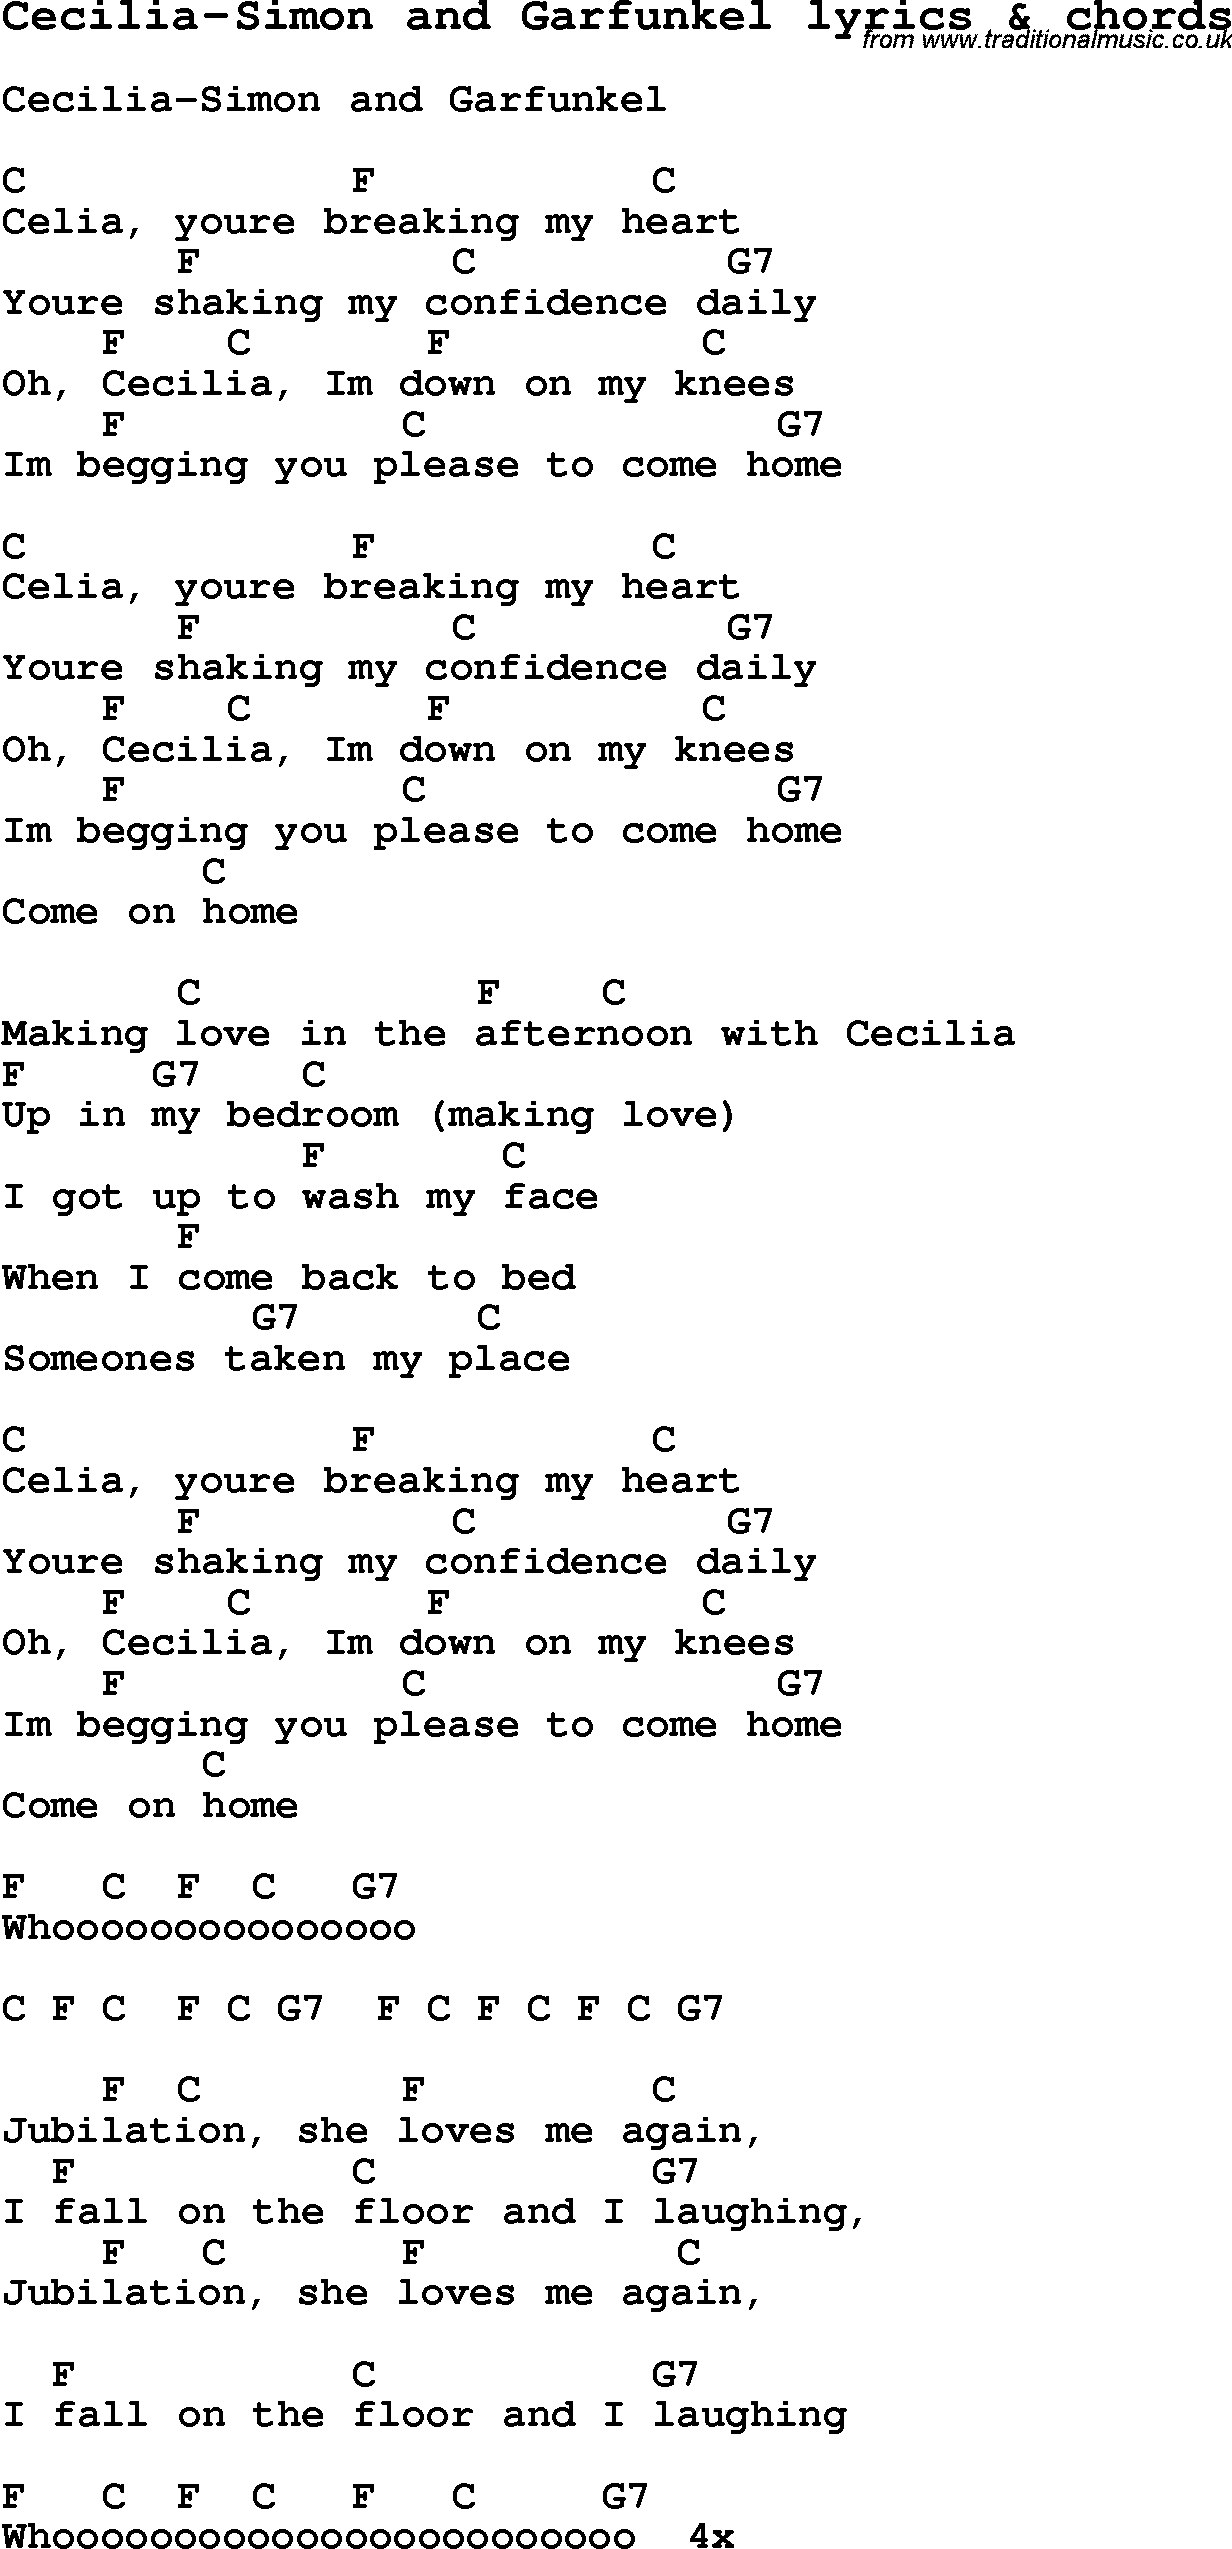 Love Song Lyrics for: Cecilia-Simon and Garfunkel with chords for Ukulele, Guitar Banjo etc.